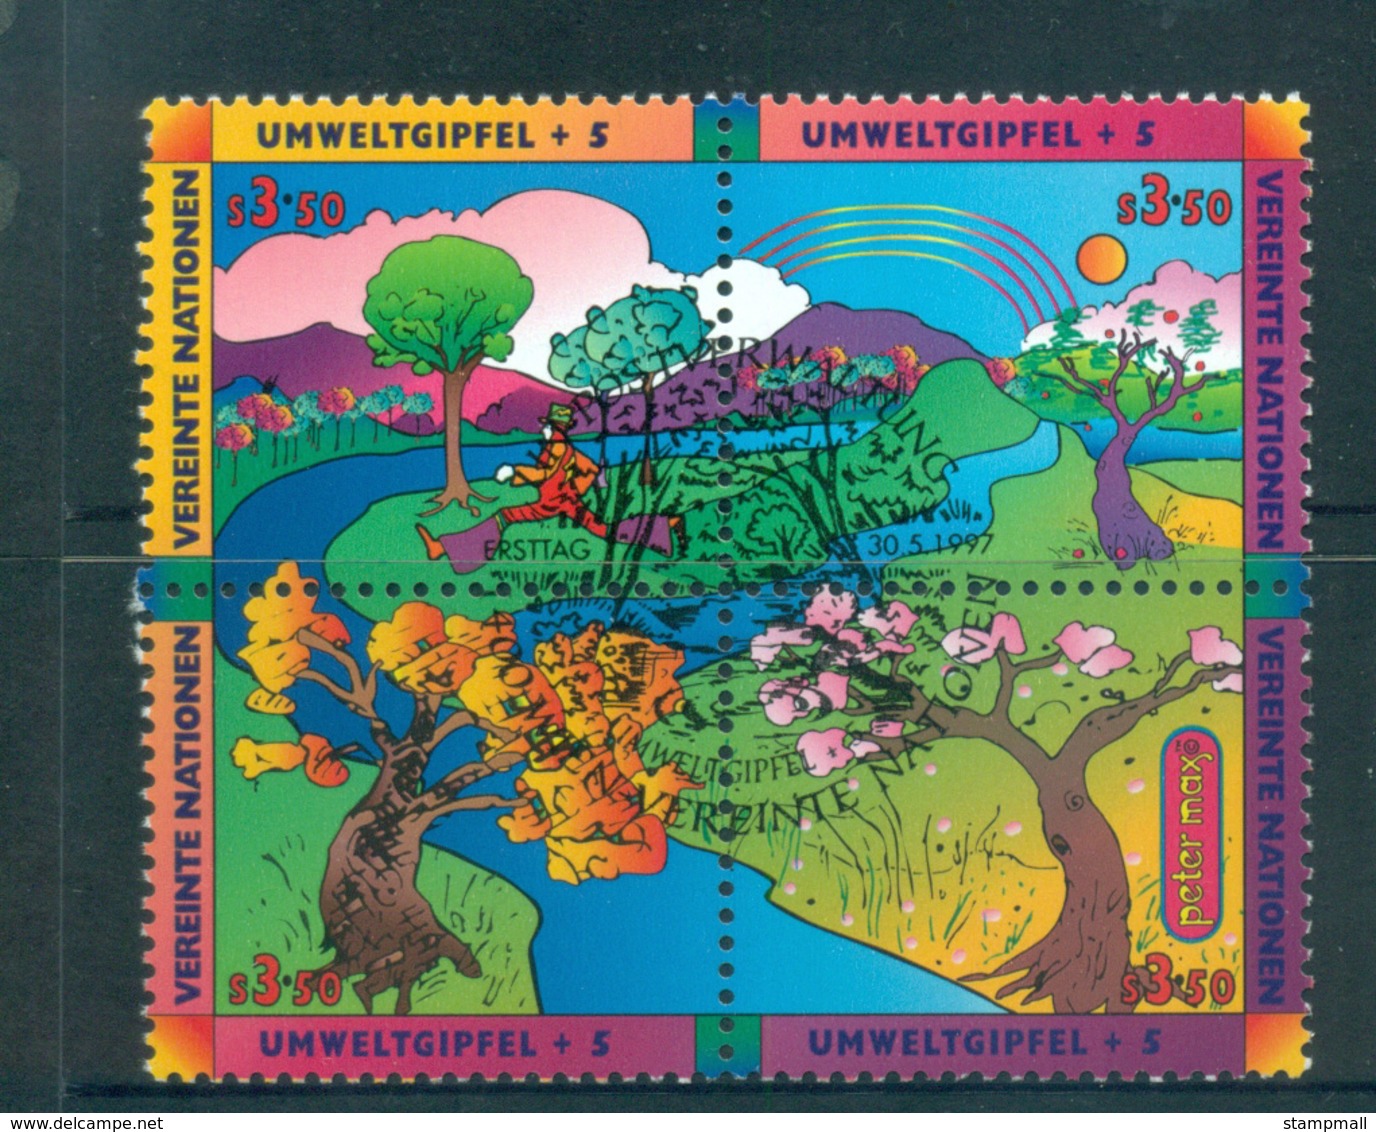 UN Vienna 1997 Earth Summit Blk 4 CTO Lot66098 - Unused Stamps